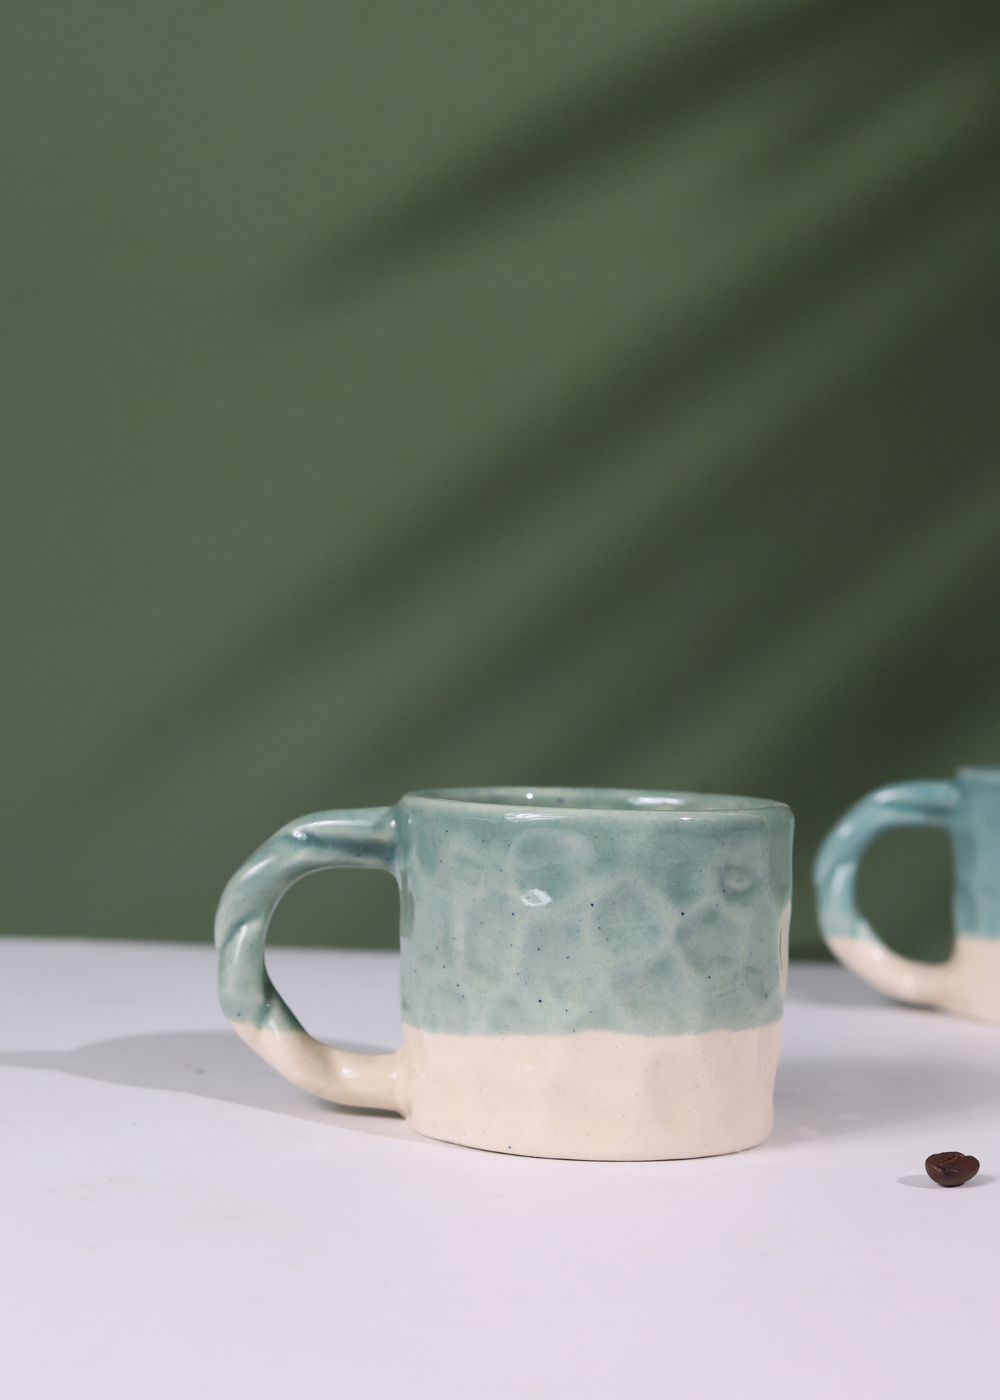 handmade teal handmoulded mug with teal & white color